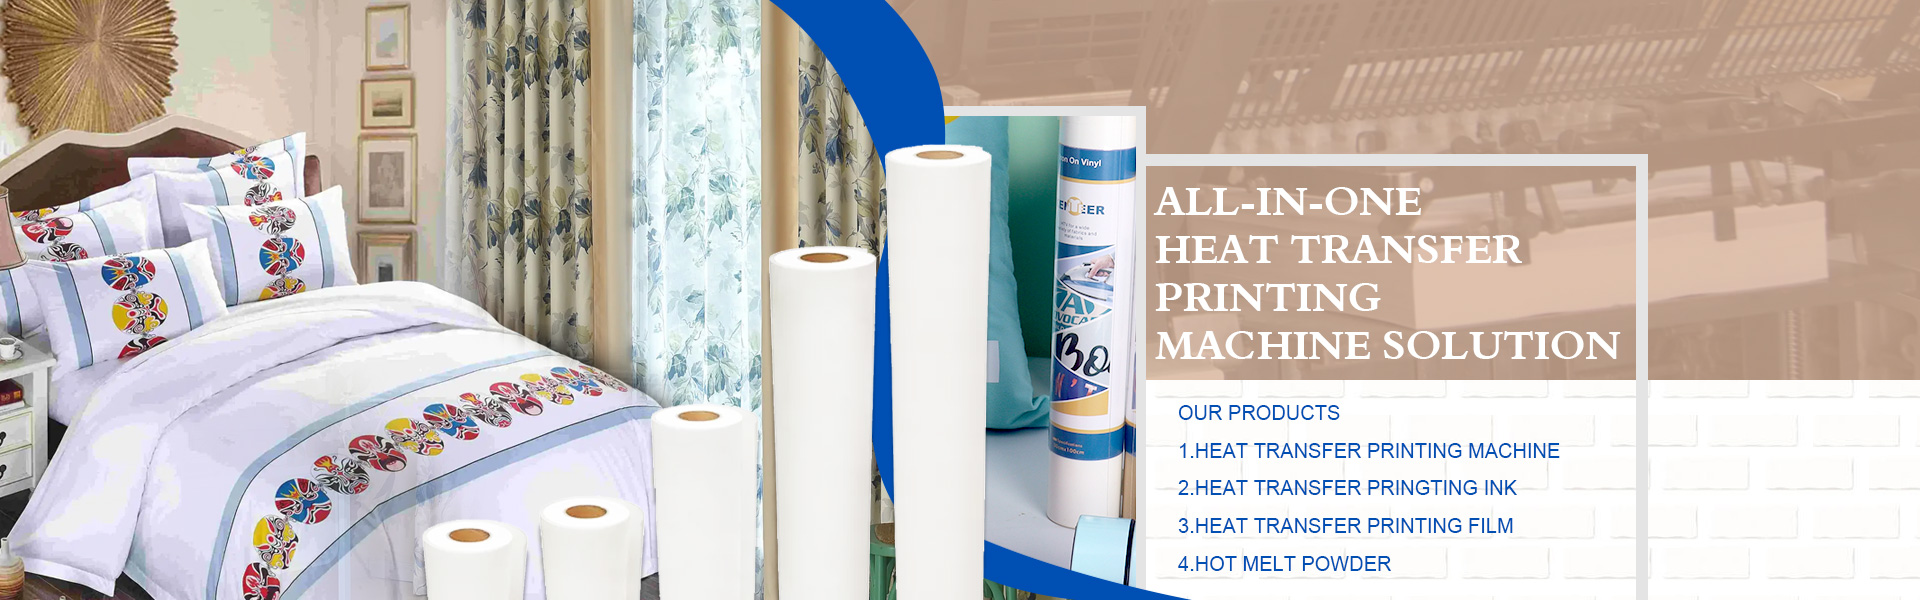 Wärmeübertragungspapier, Sublimationspapier, digitales Druckerpapier,Suzhou Huarong Paper Products Co., Ltd